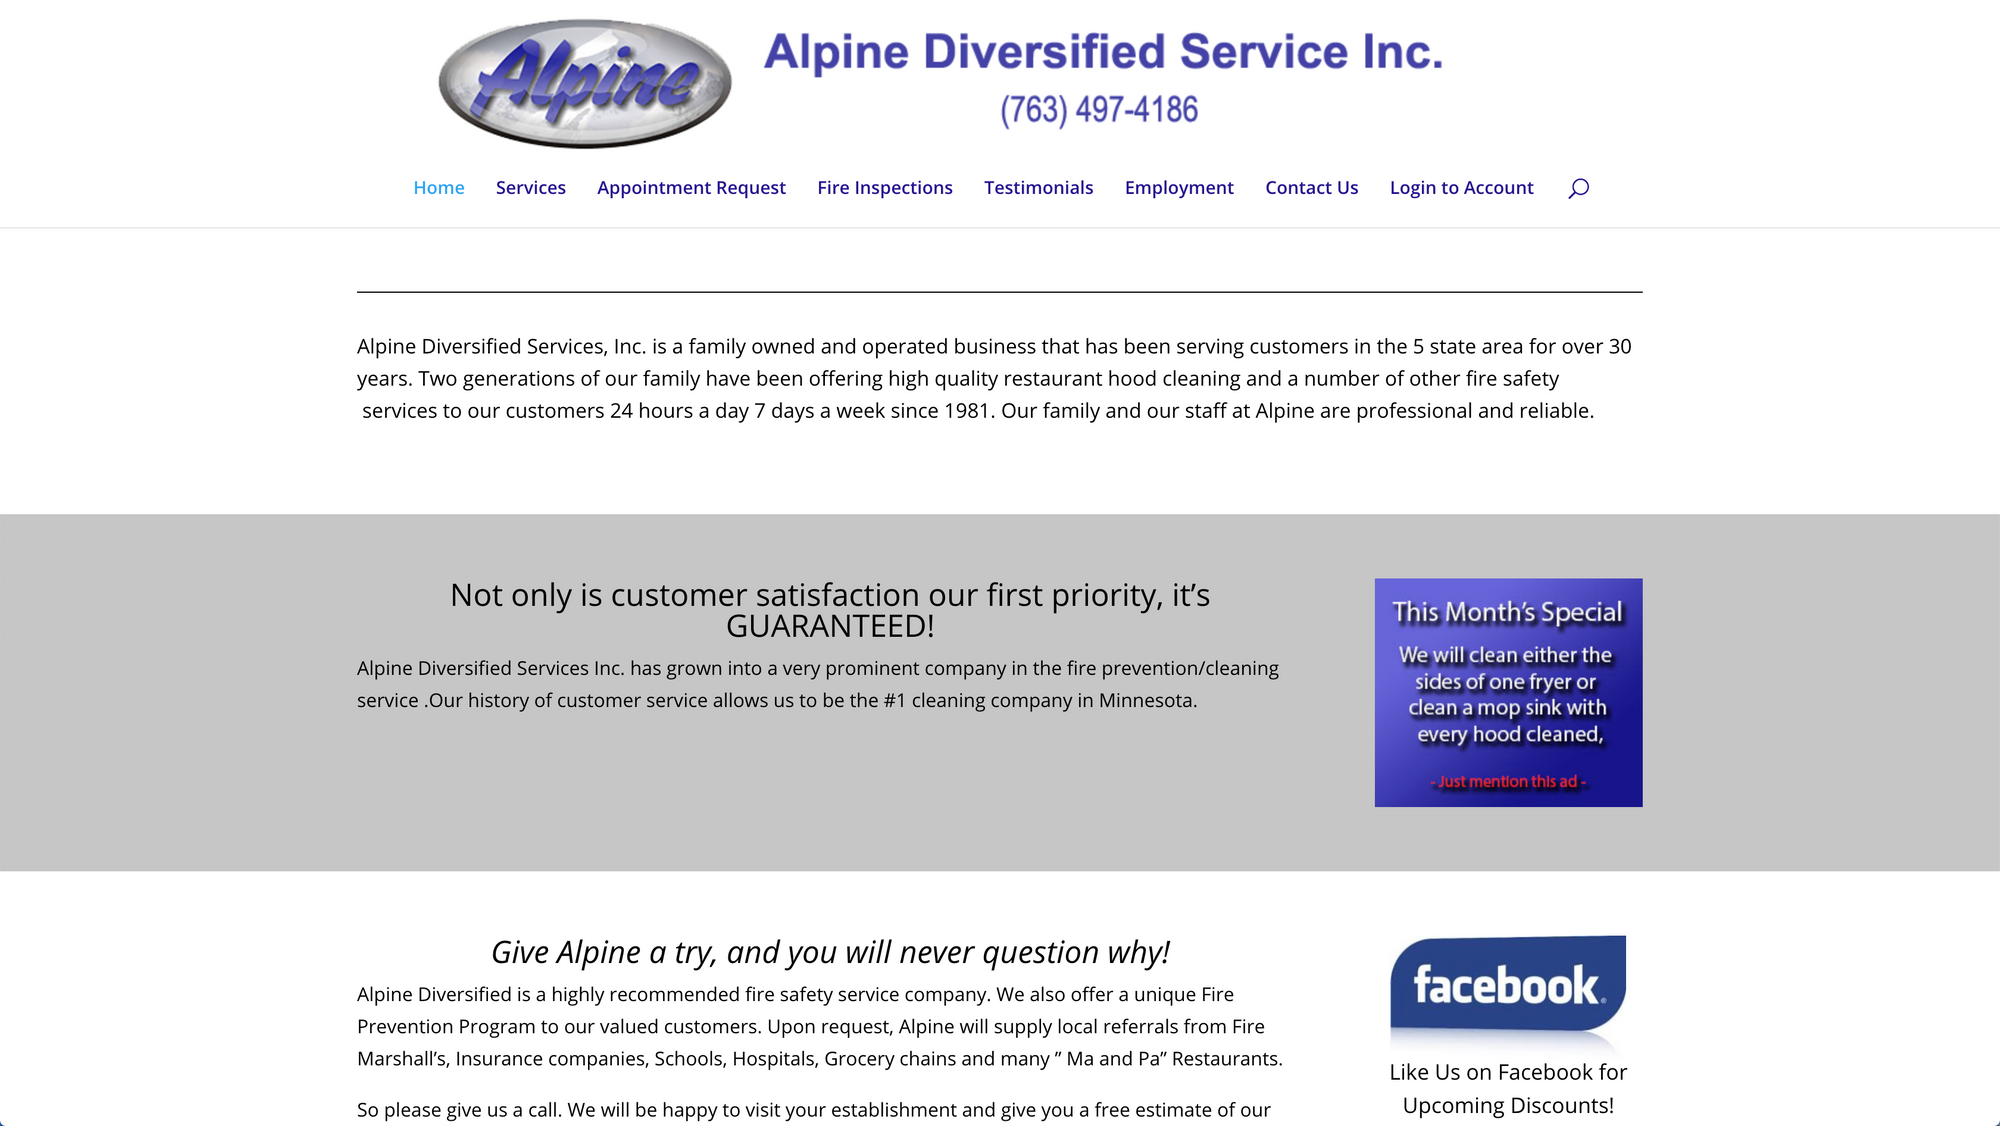 Alpine Diversified Services